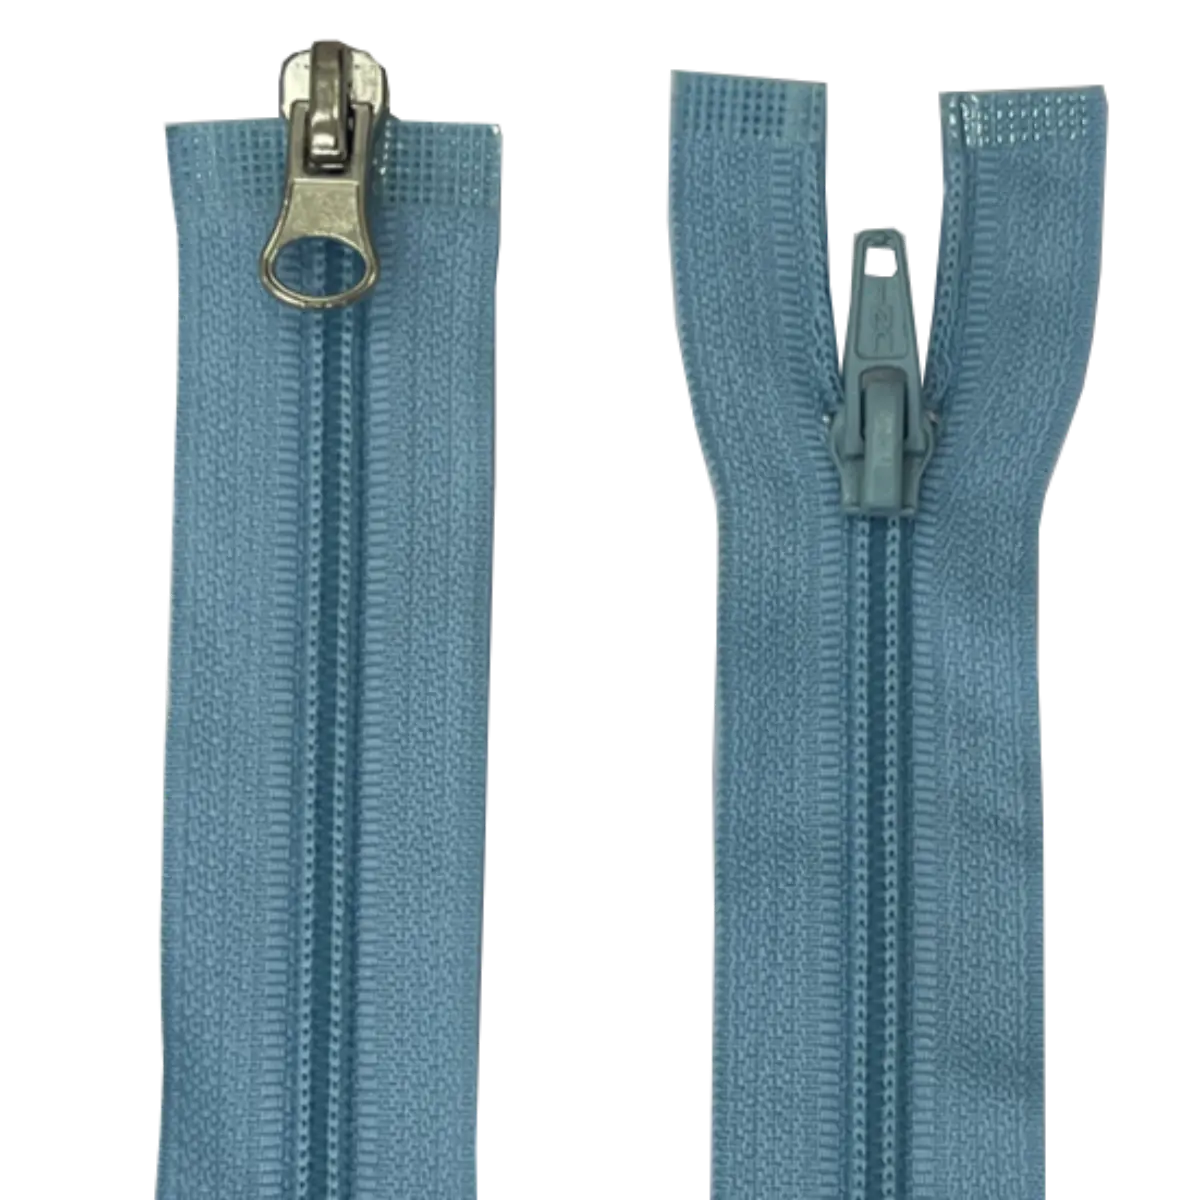 Double Slider 2 Way Nylon/Plastic Zip - With Metal Sliders 21" (53cm)